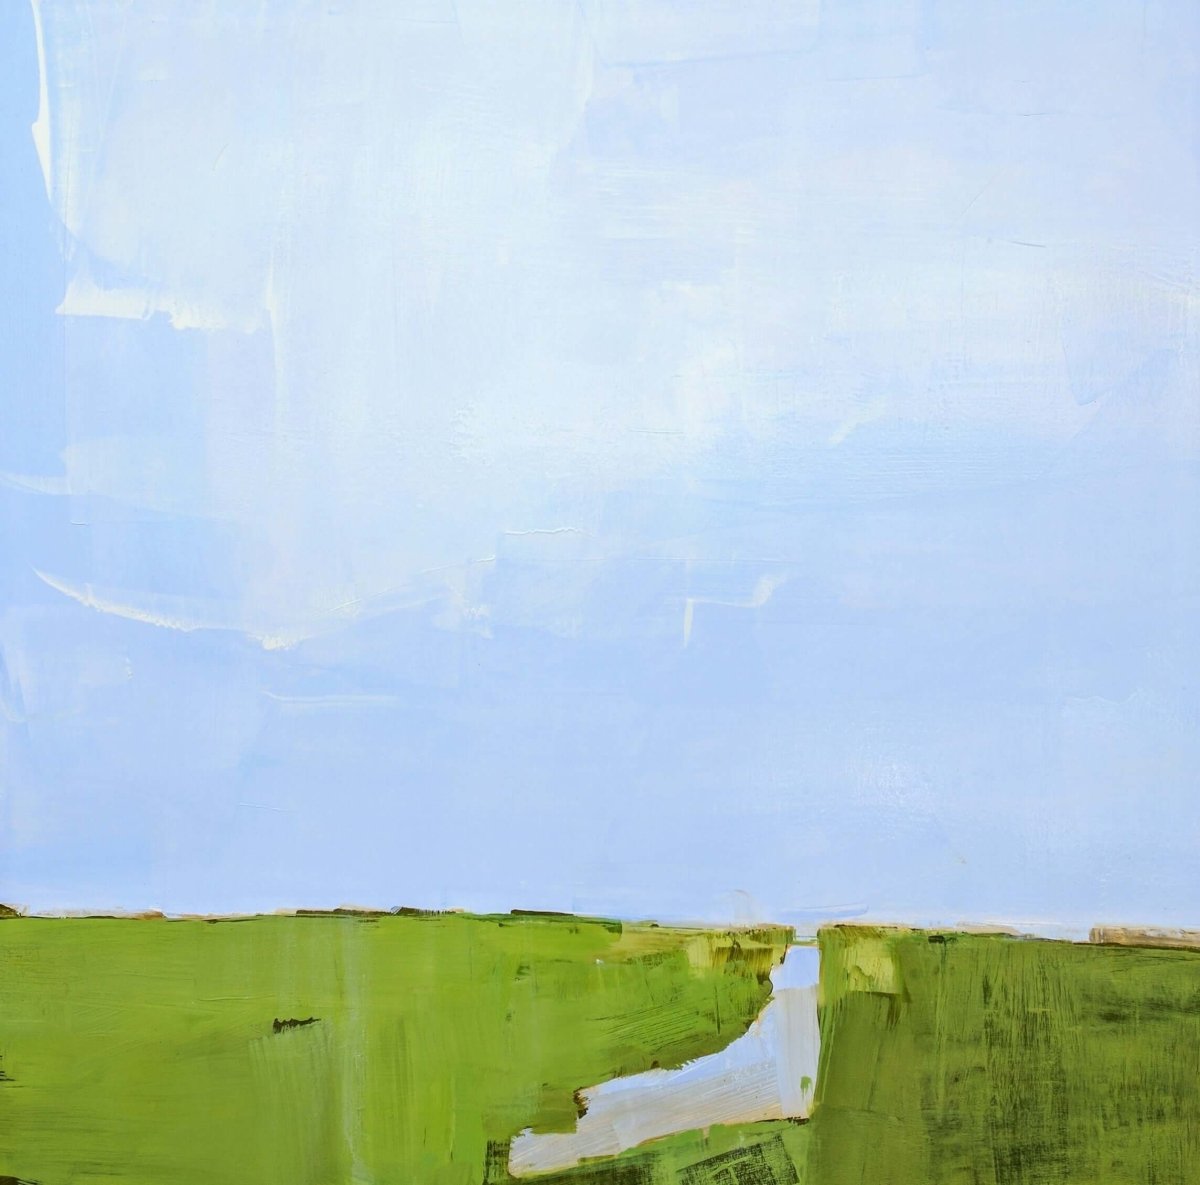 Green Marsh by Deborah Hill at LePrince Galleries